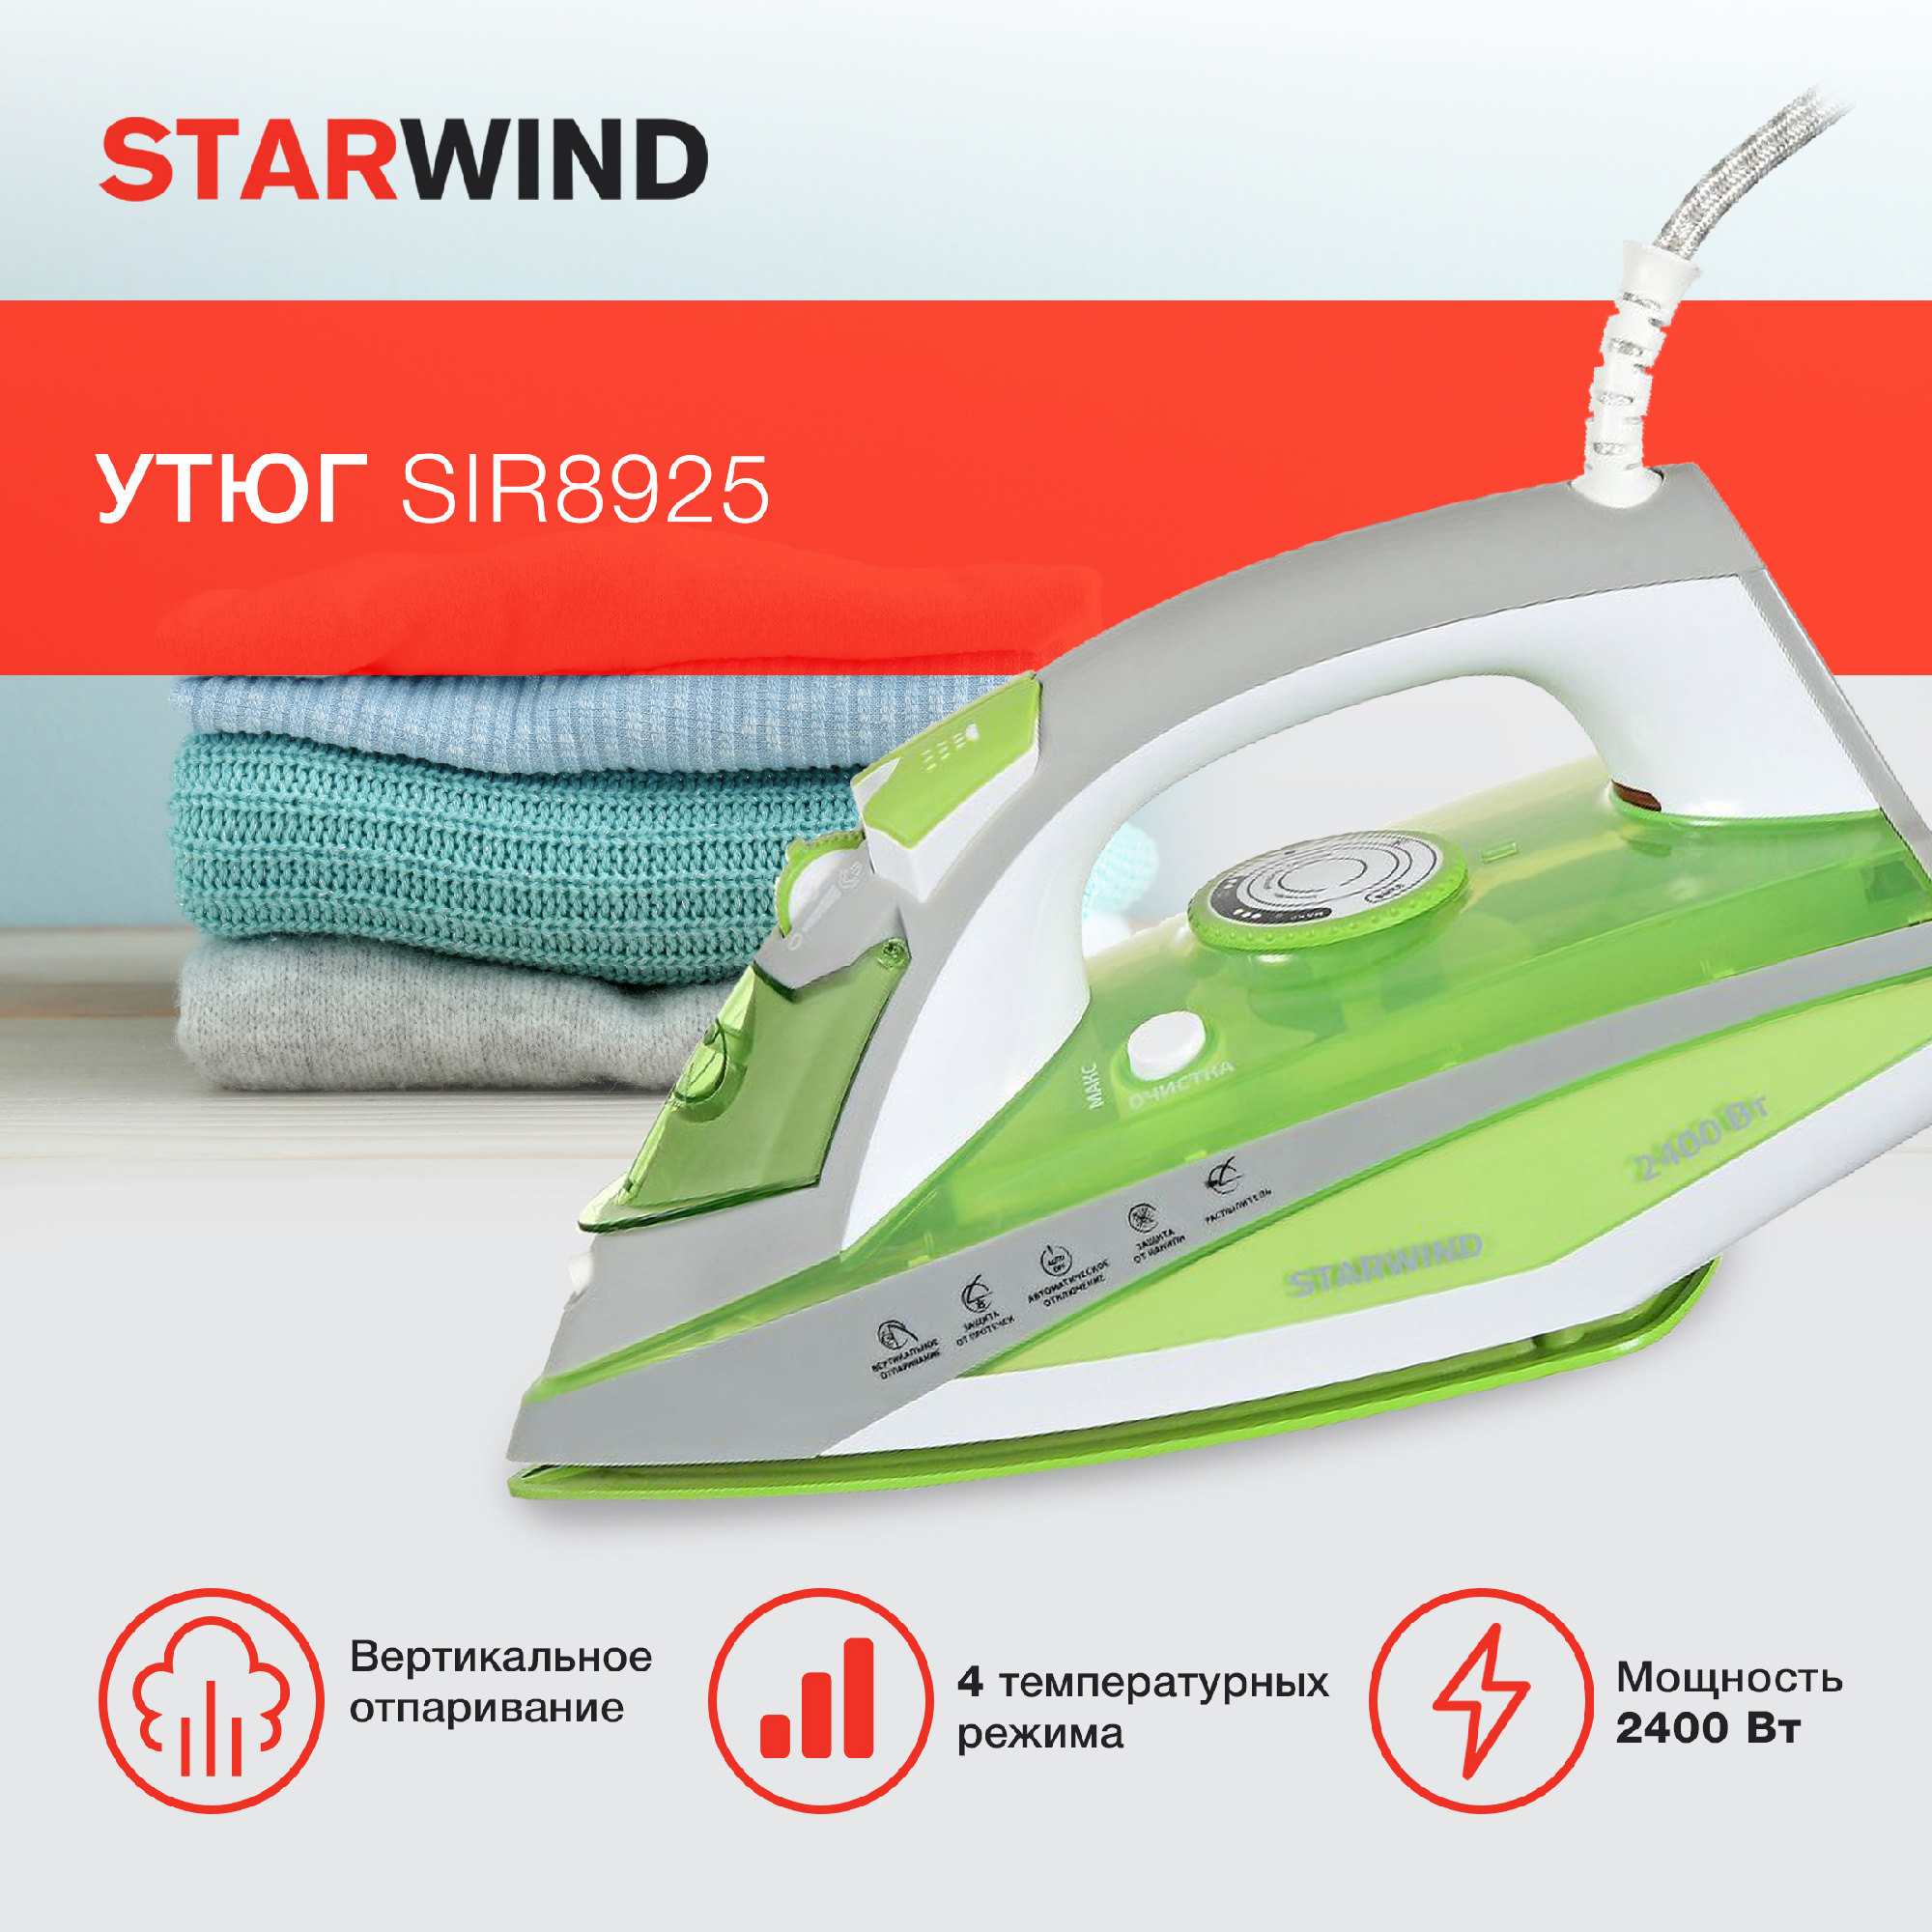 Утюг Starwind SIR8925 зеленый/серый от магазина Старвинд